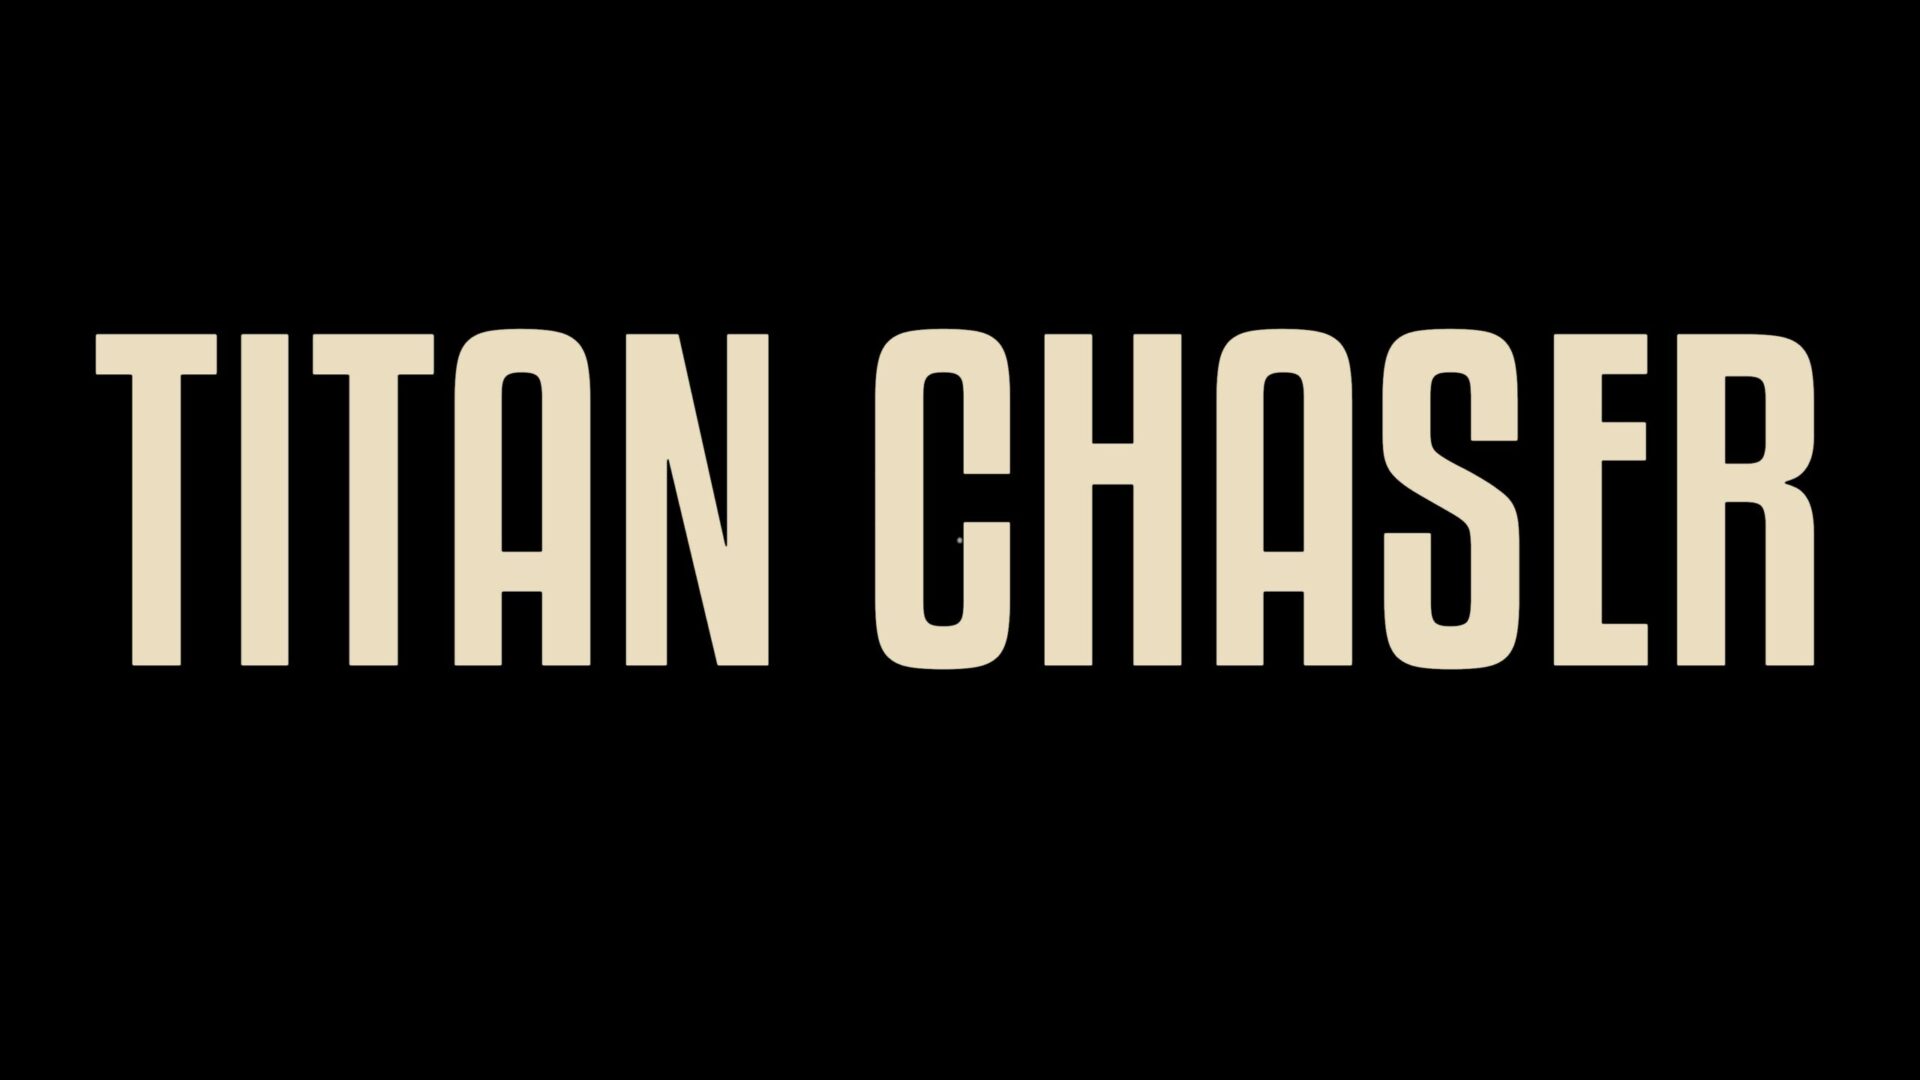 Titan Chaser intro